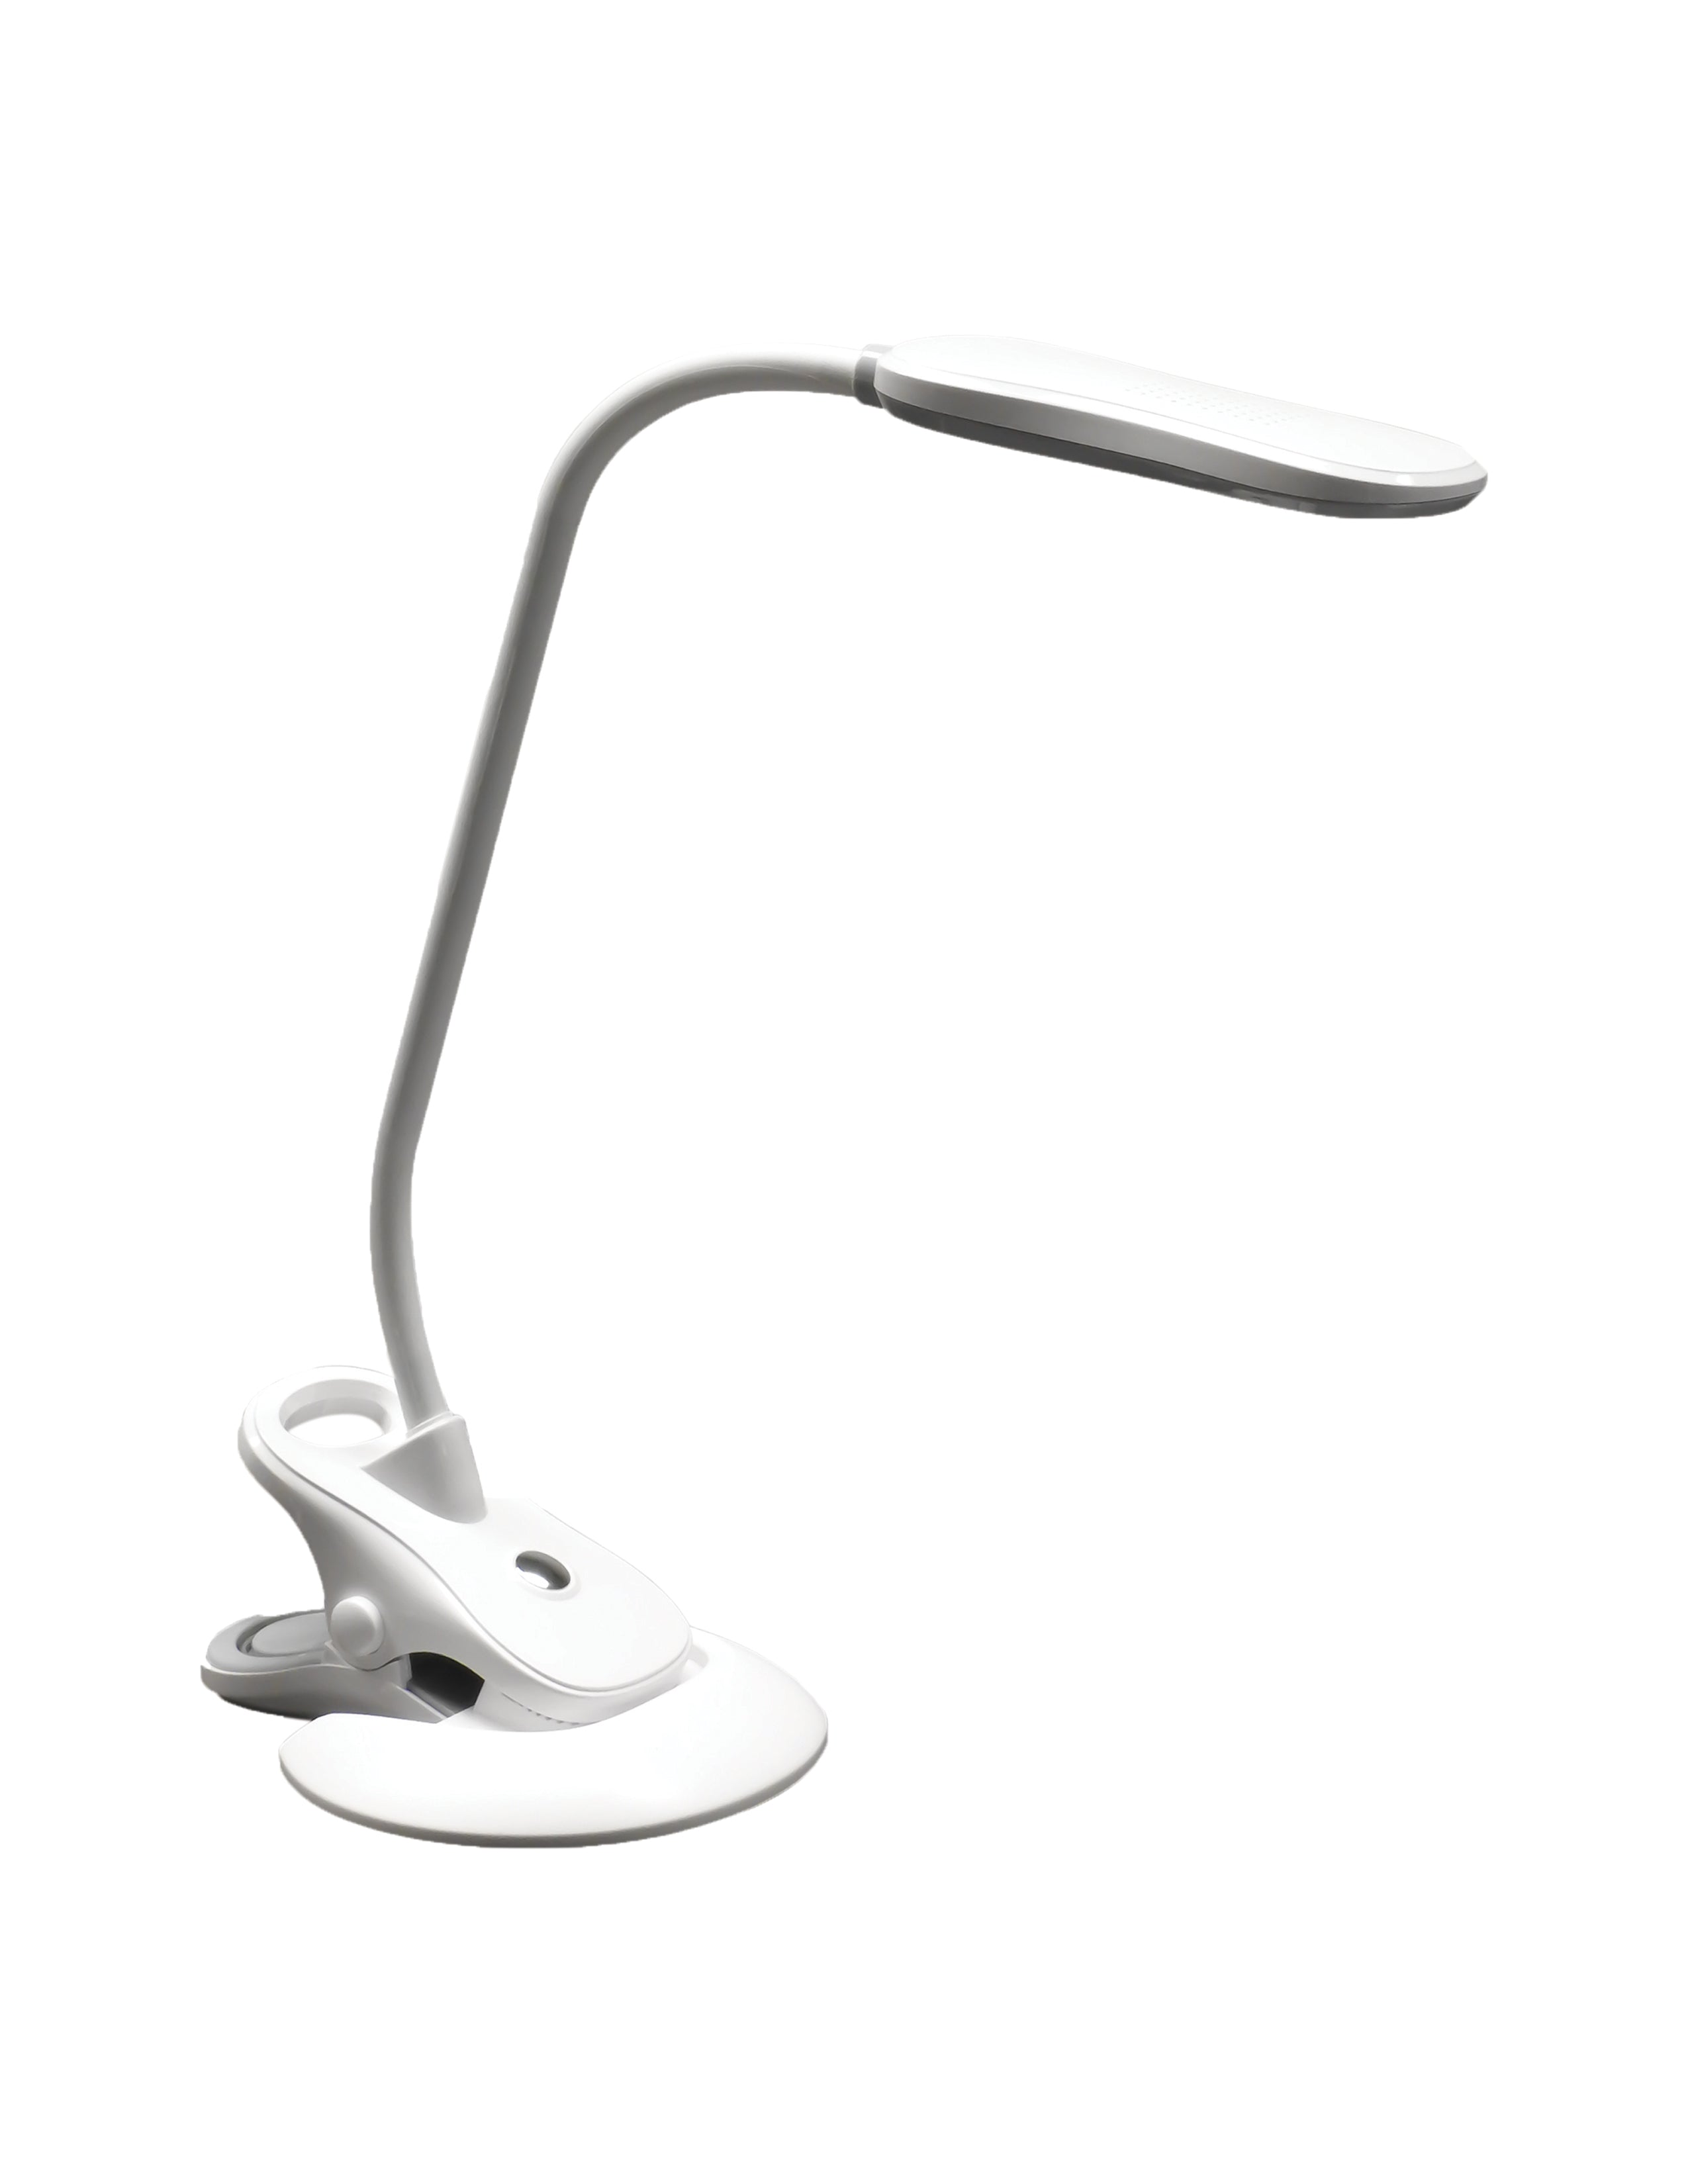 RDL-40C/ Versatile 2-in-1 LED Desk Lamp